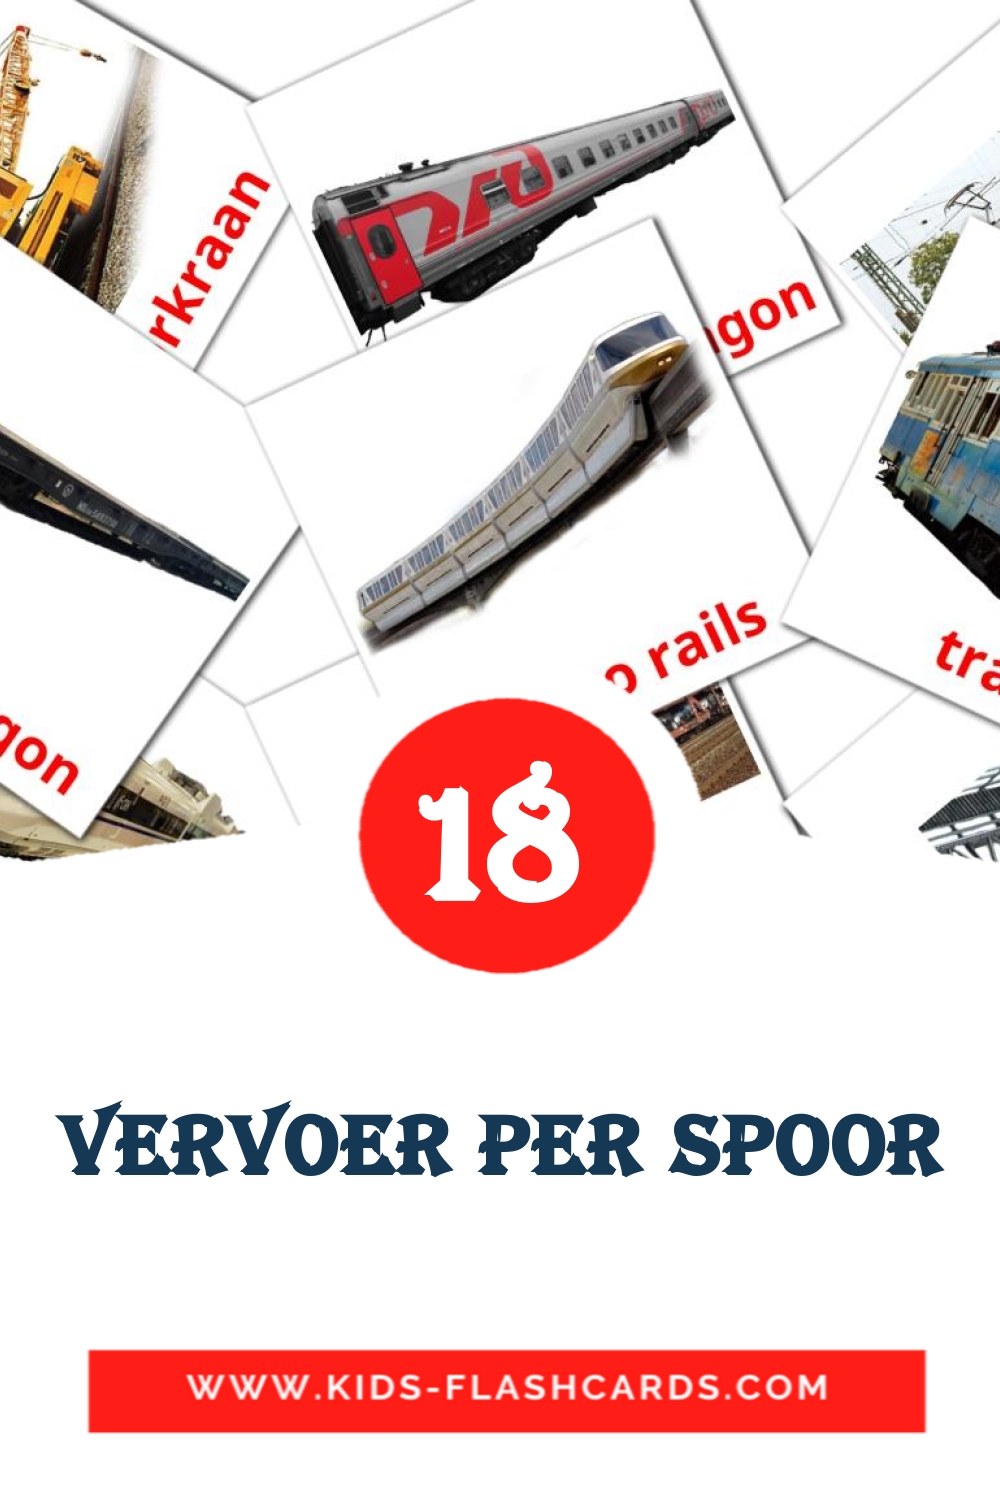 18 tarjetas didacticas de Vervoer per spoor para el jardín de infancia en holandés